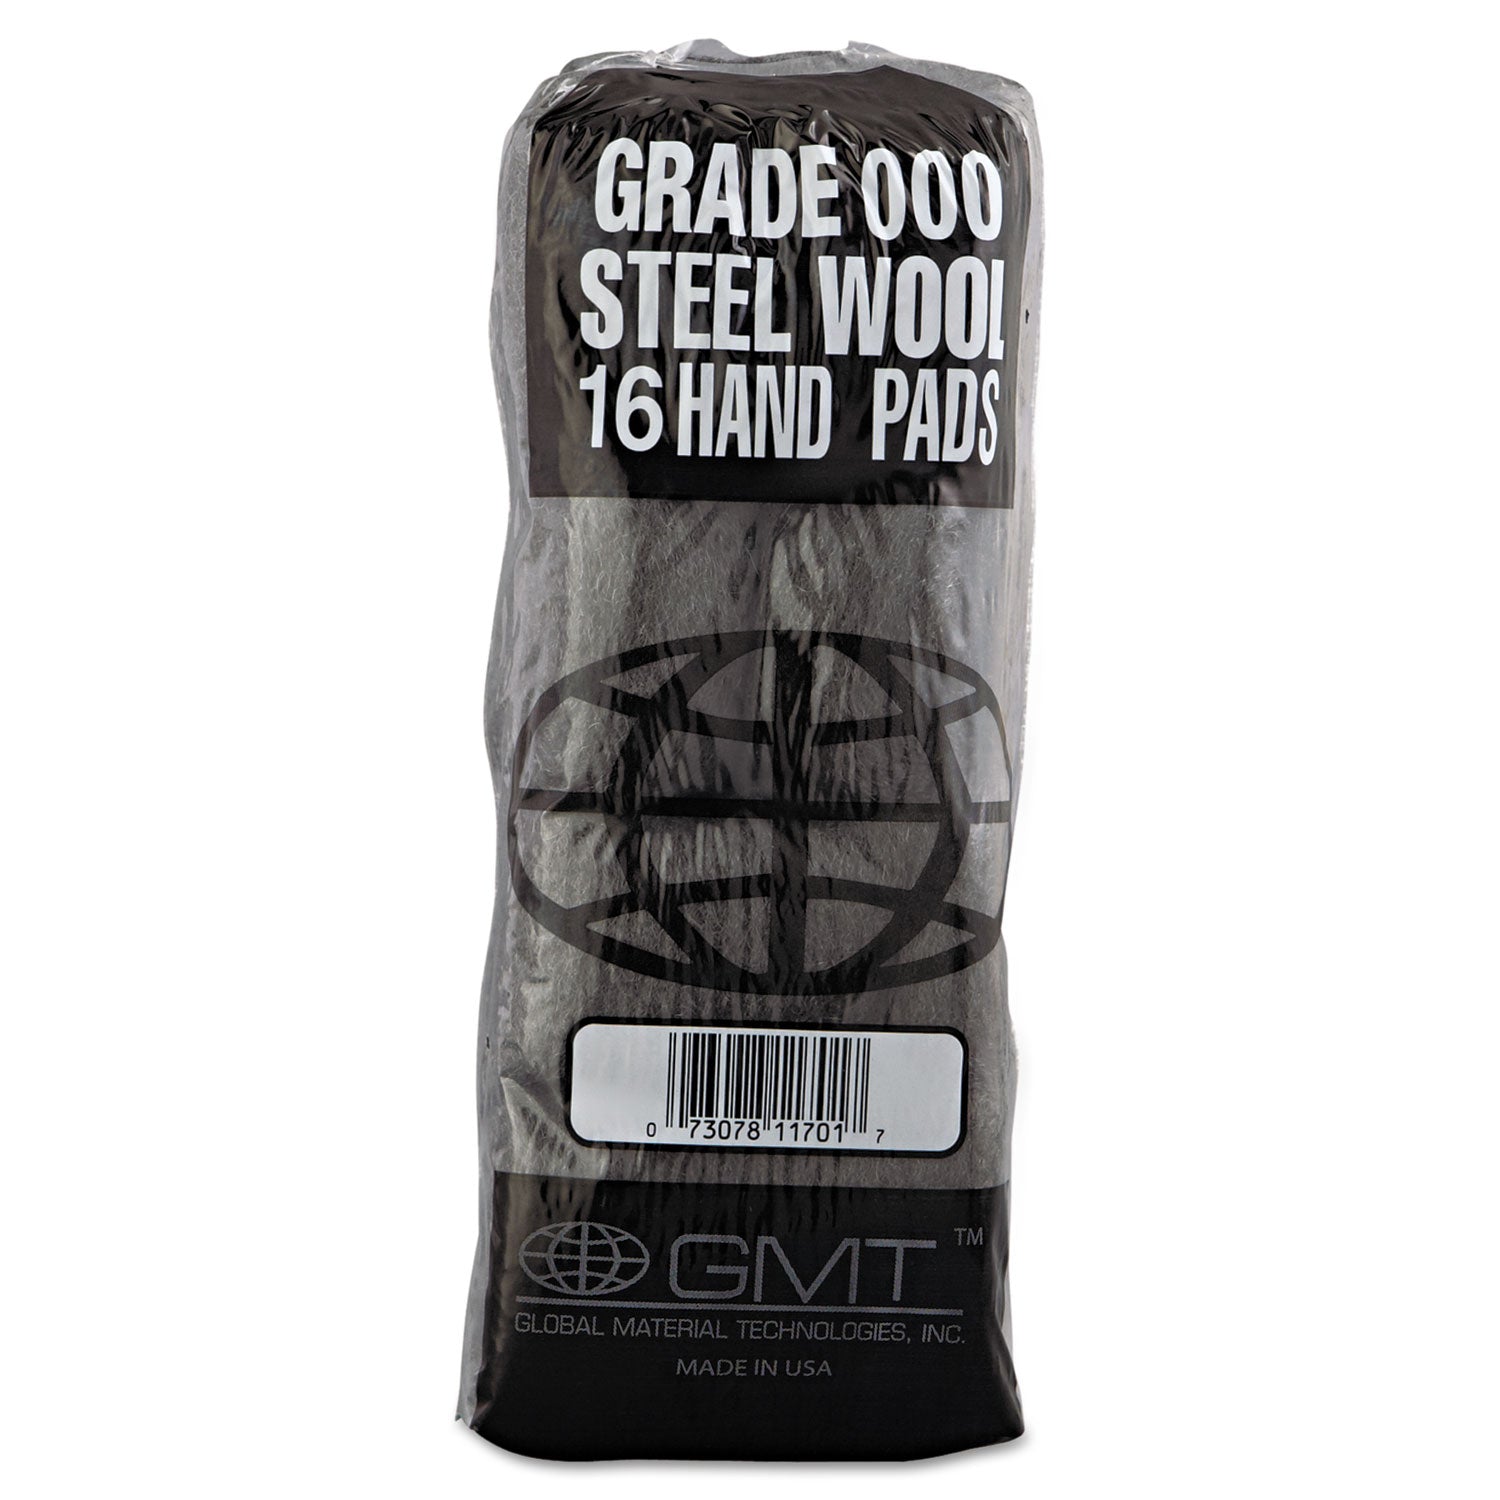 Industrial-Quality Steel Wool Hand Pads, #000 Extra Fine, Steel Gray, 16 Pads/Sleeve, 12 Sleeves/Carton - 